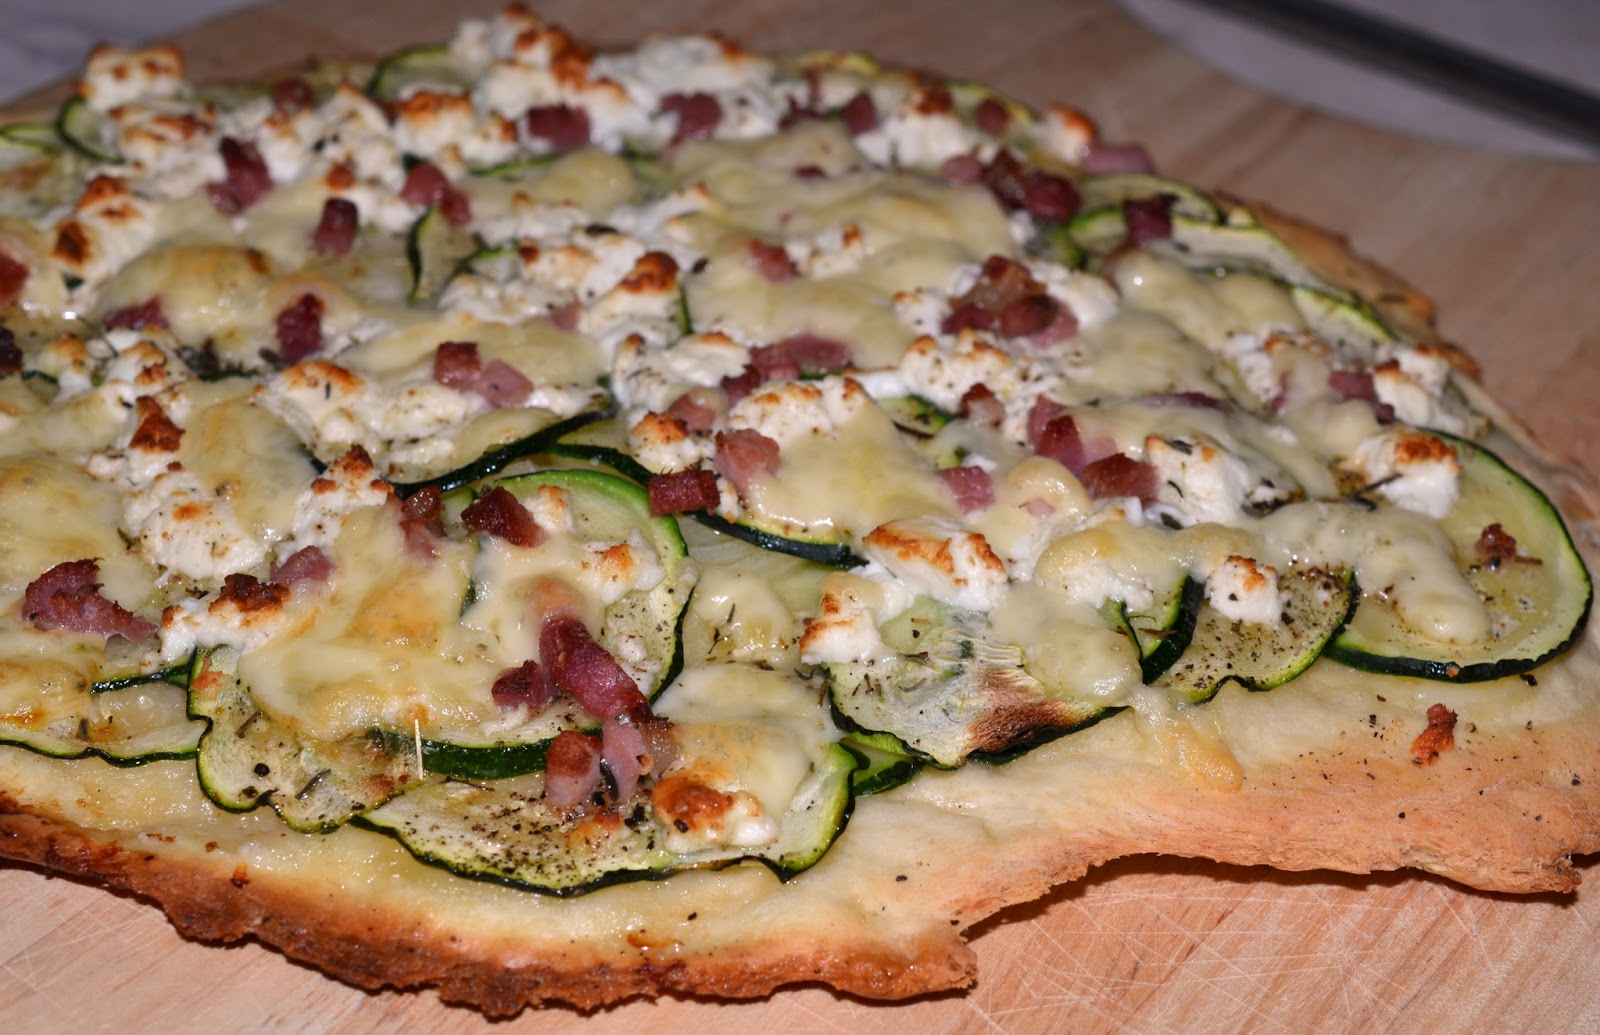 Lenas Sofa: Zucchini-Pizza mit Fetakäse